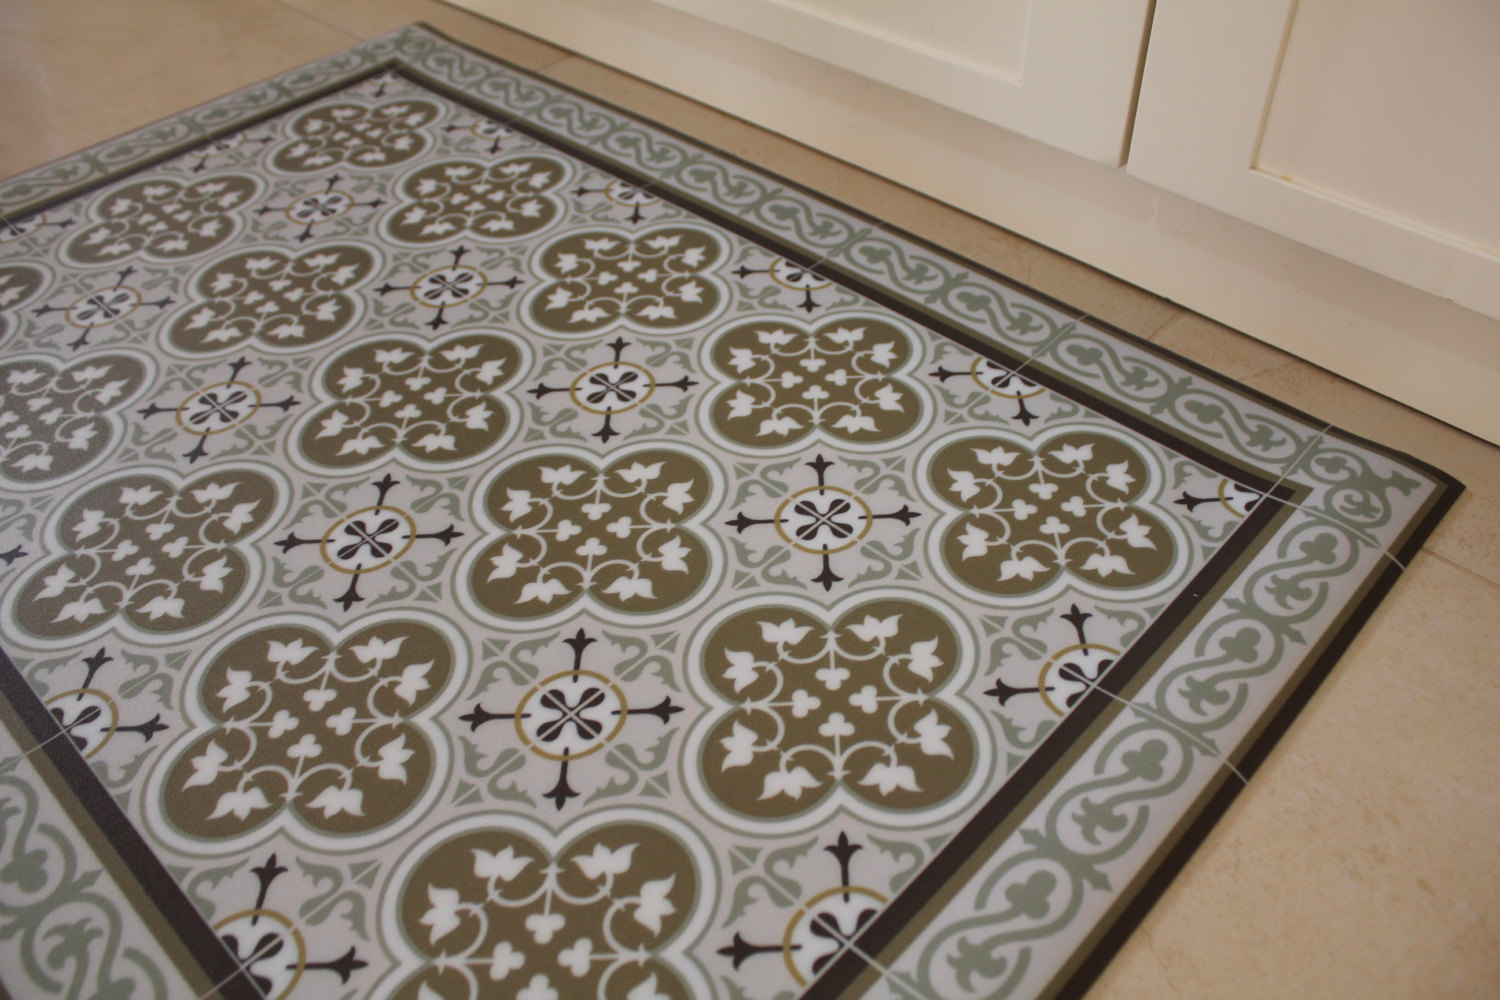 Free Shipping Tiles Pattern Decorative PVC vinyl mat linoleum rug - Color Ocher And Brown 174 PVC Rug, Kitchen Mat